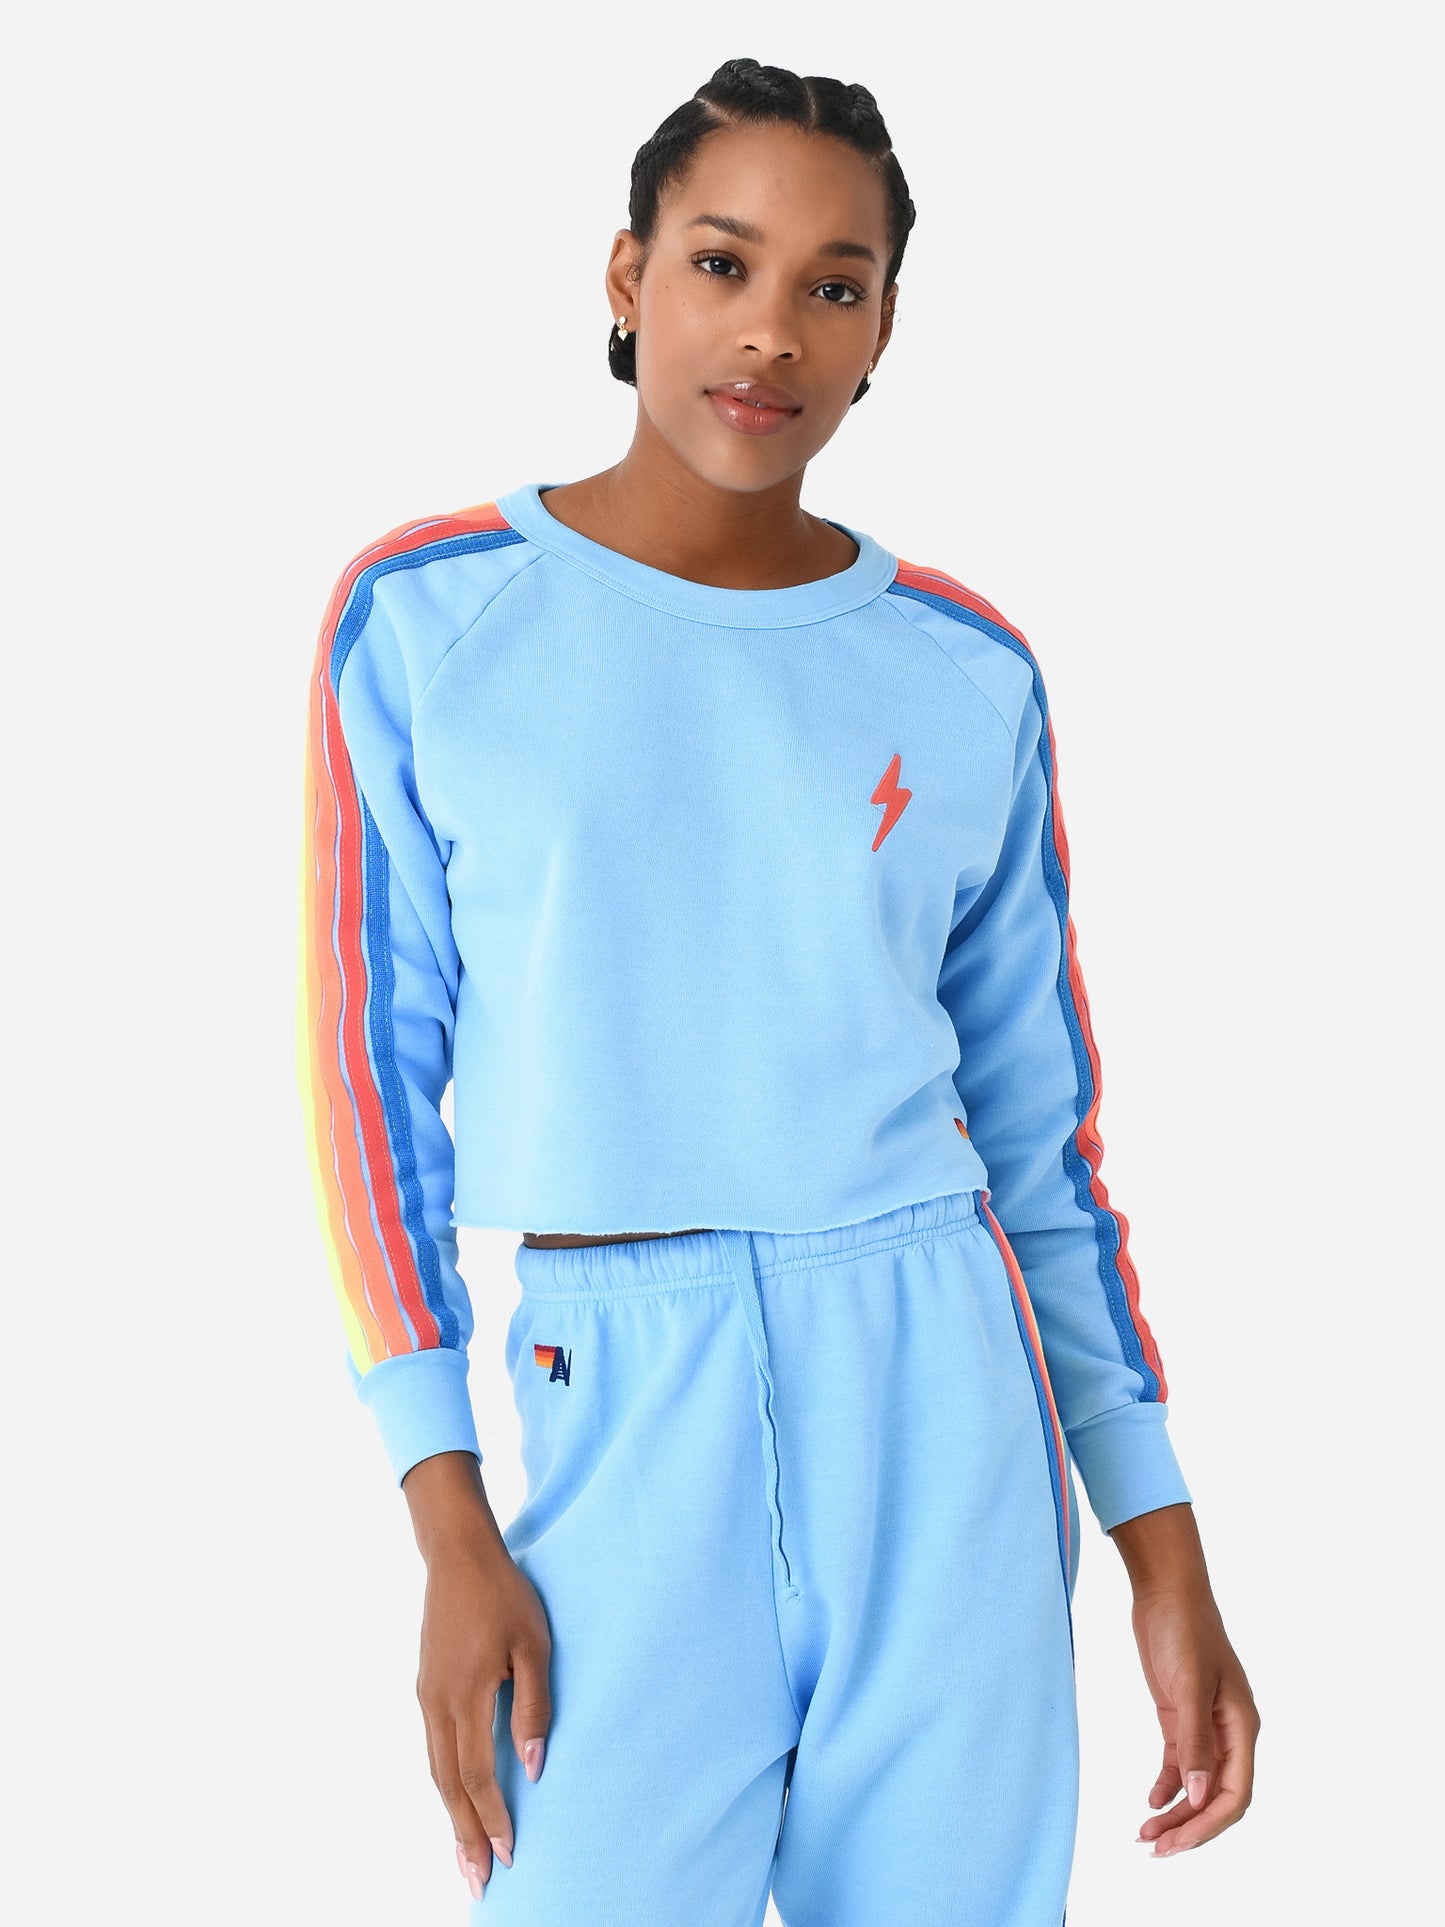 Aviator Nation Women's Bolt Embroidery Classic Cropped Crew Sweatshirt